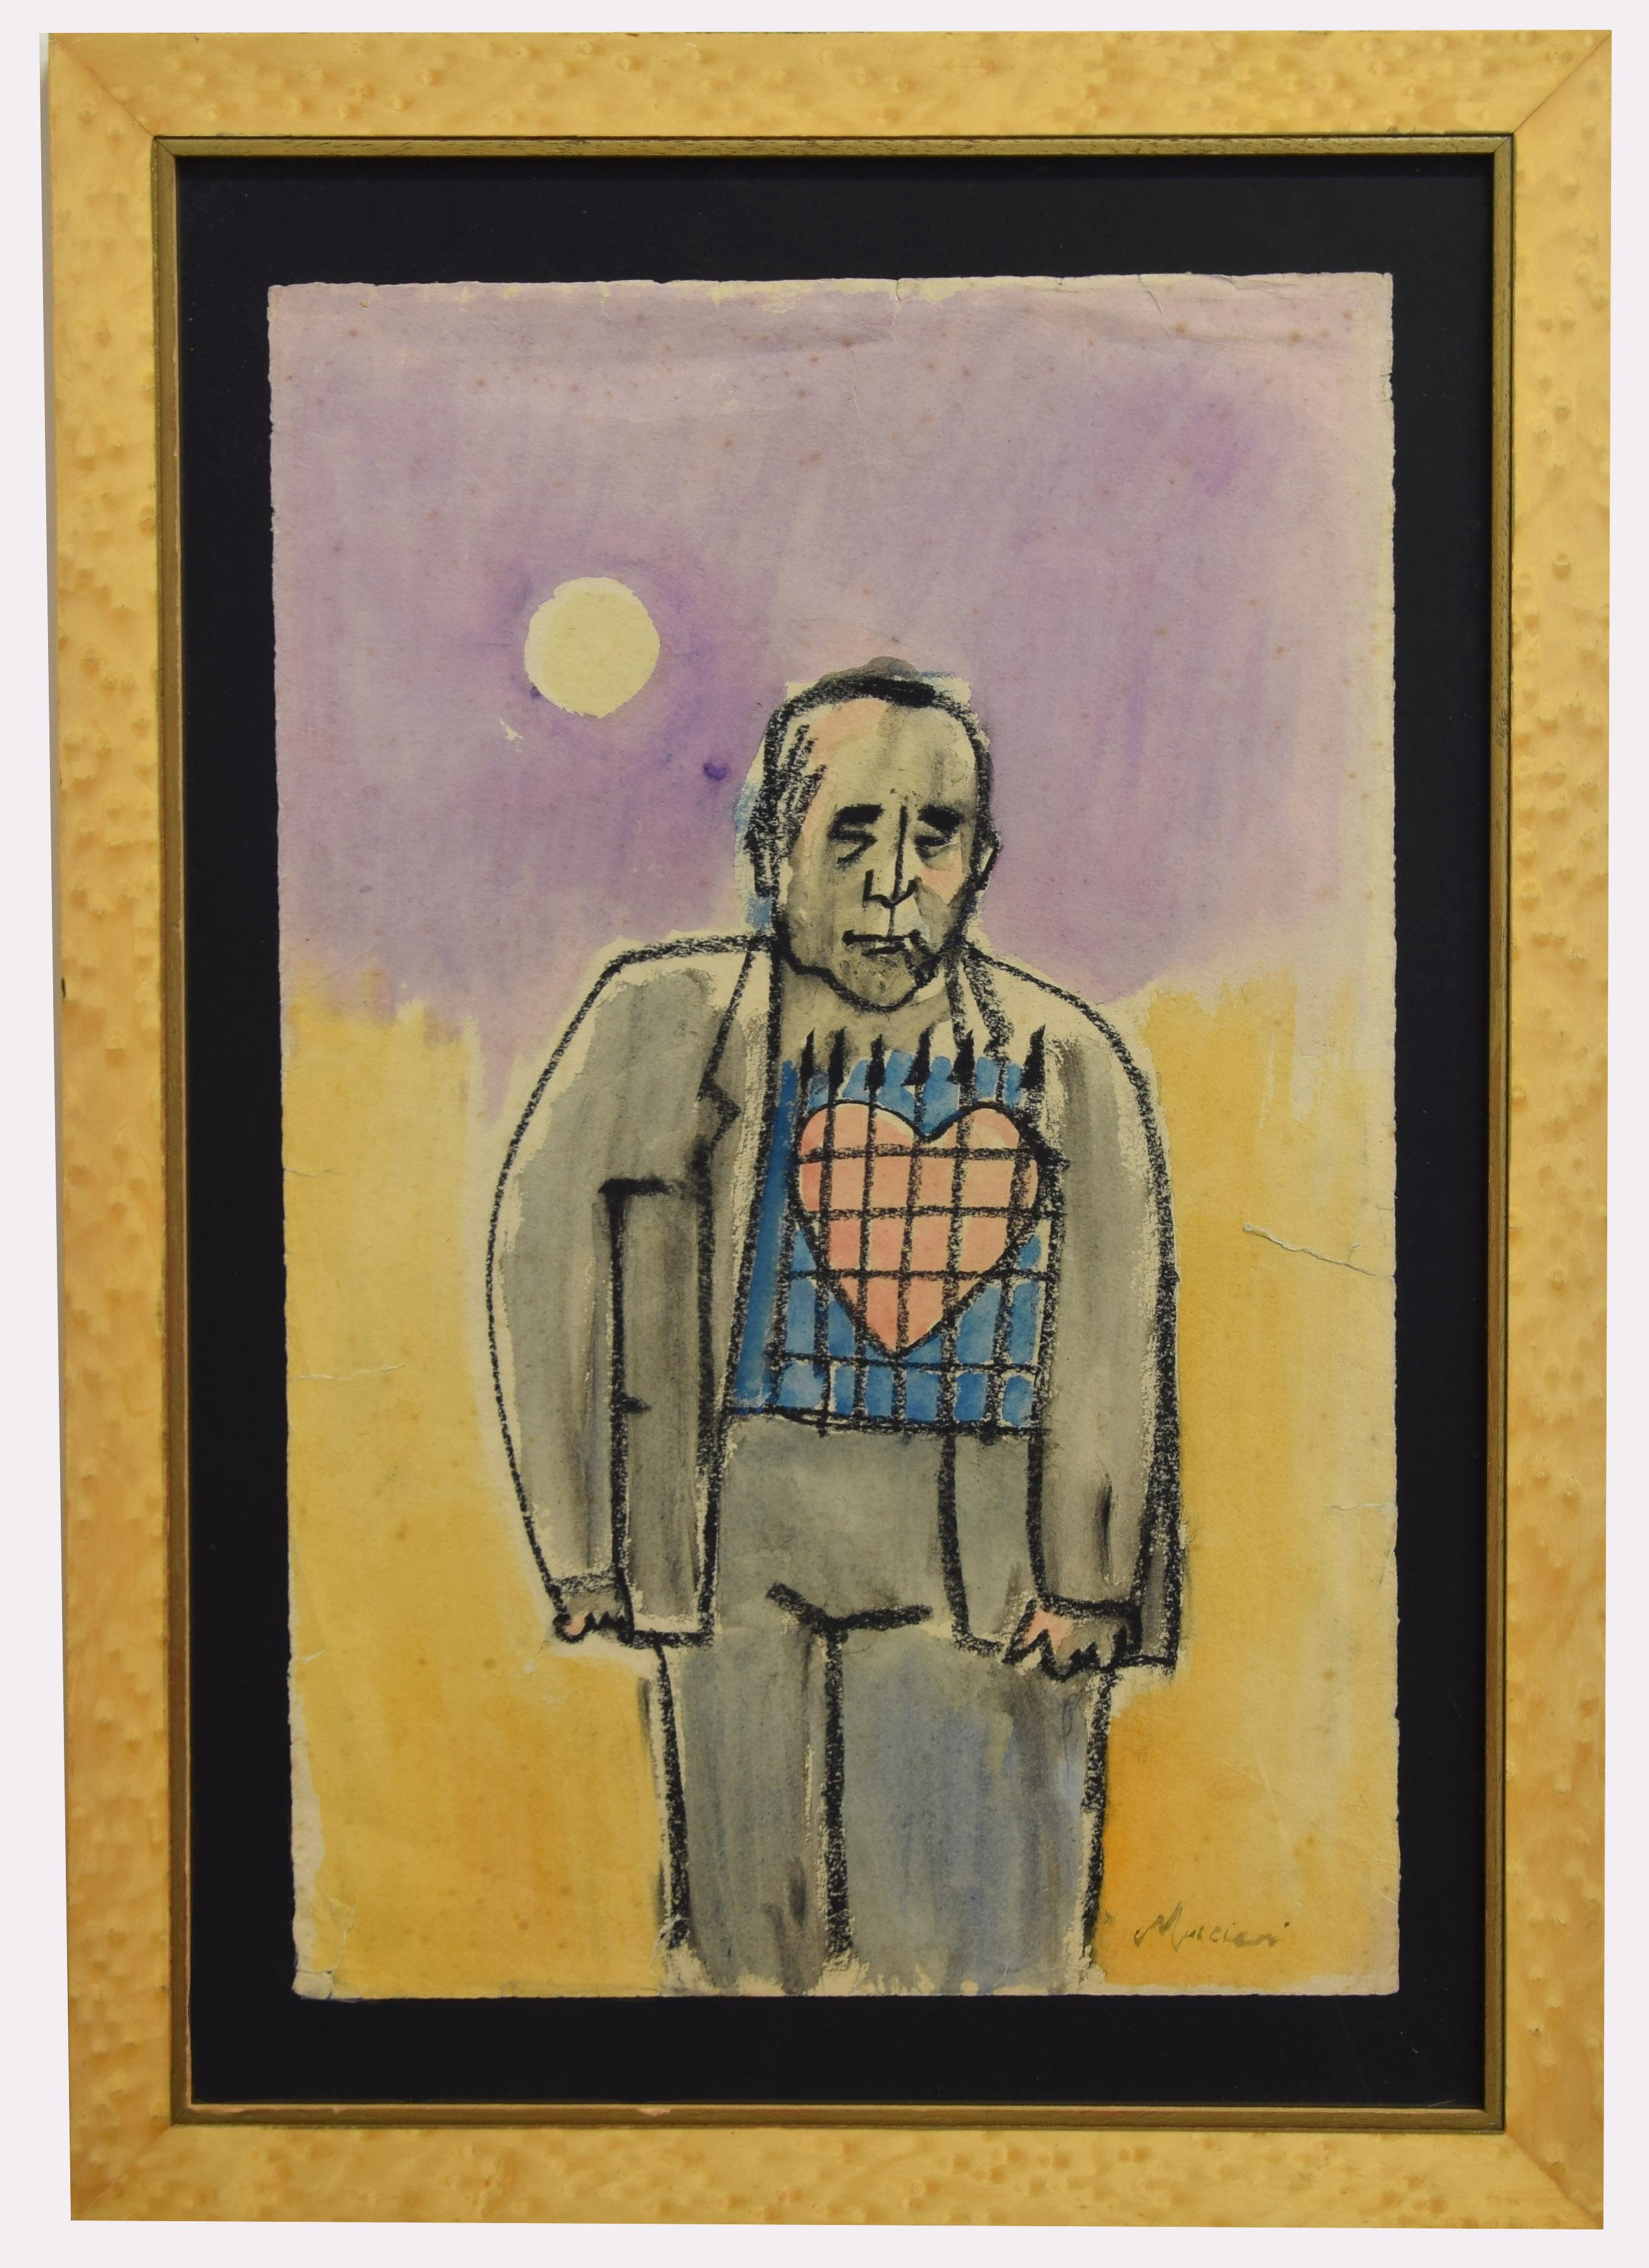 Self-Portrait with Big Heart - Charcoal and Watercolor by M. Maccari -1960s - Art by  Mino Maccari